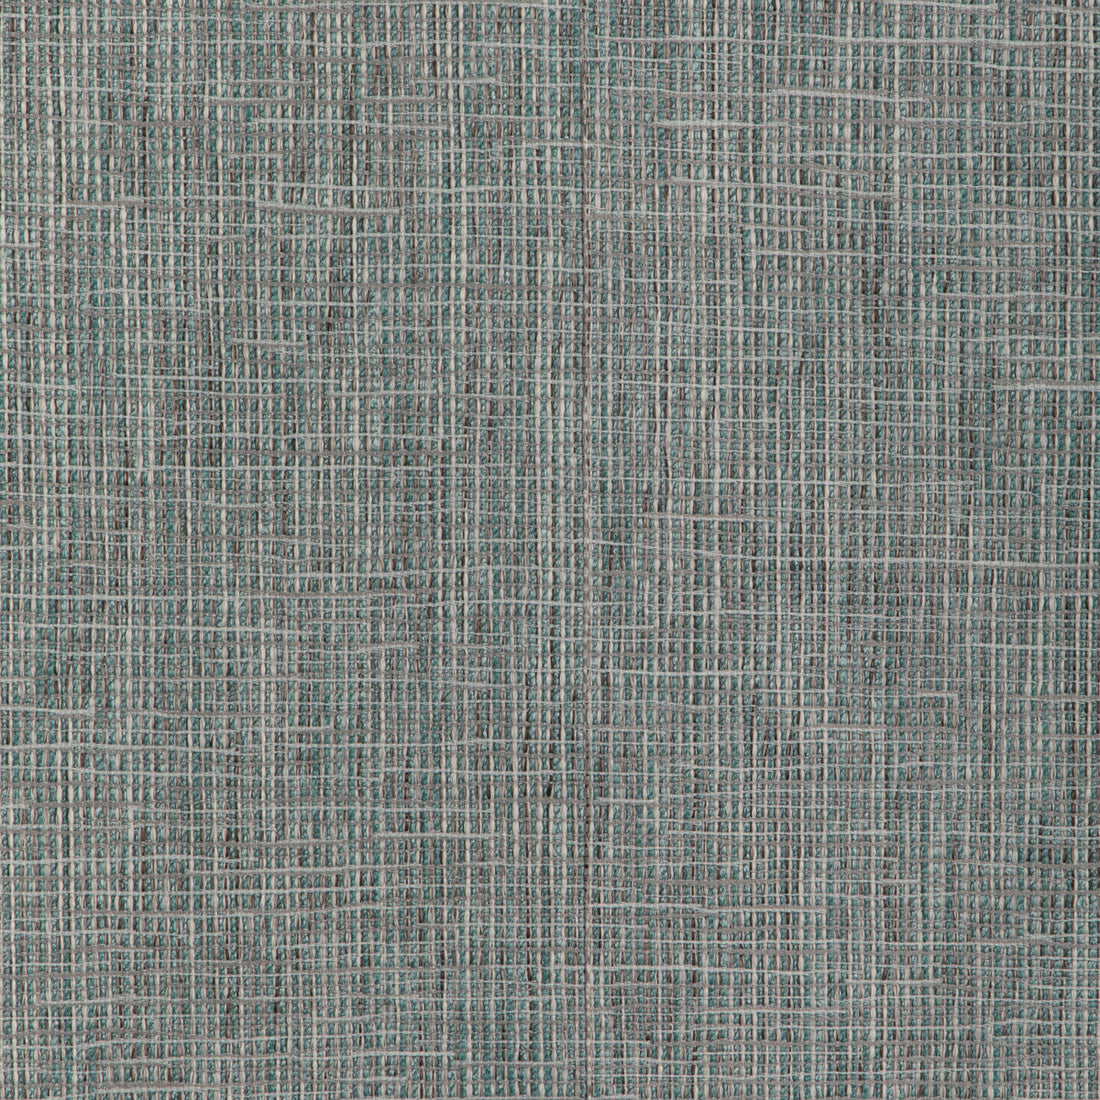 Kravet Smart fabric in 36668-35 color - pattern 36668.35.0 - by Kravet Smart in the Performance Kravetarmor collection